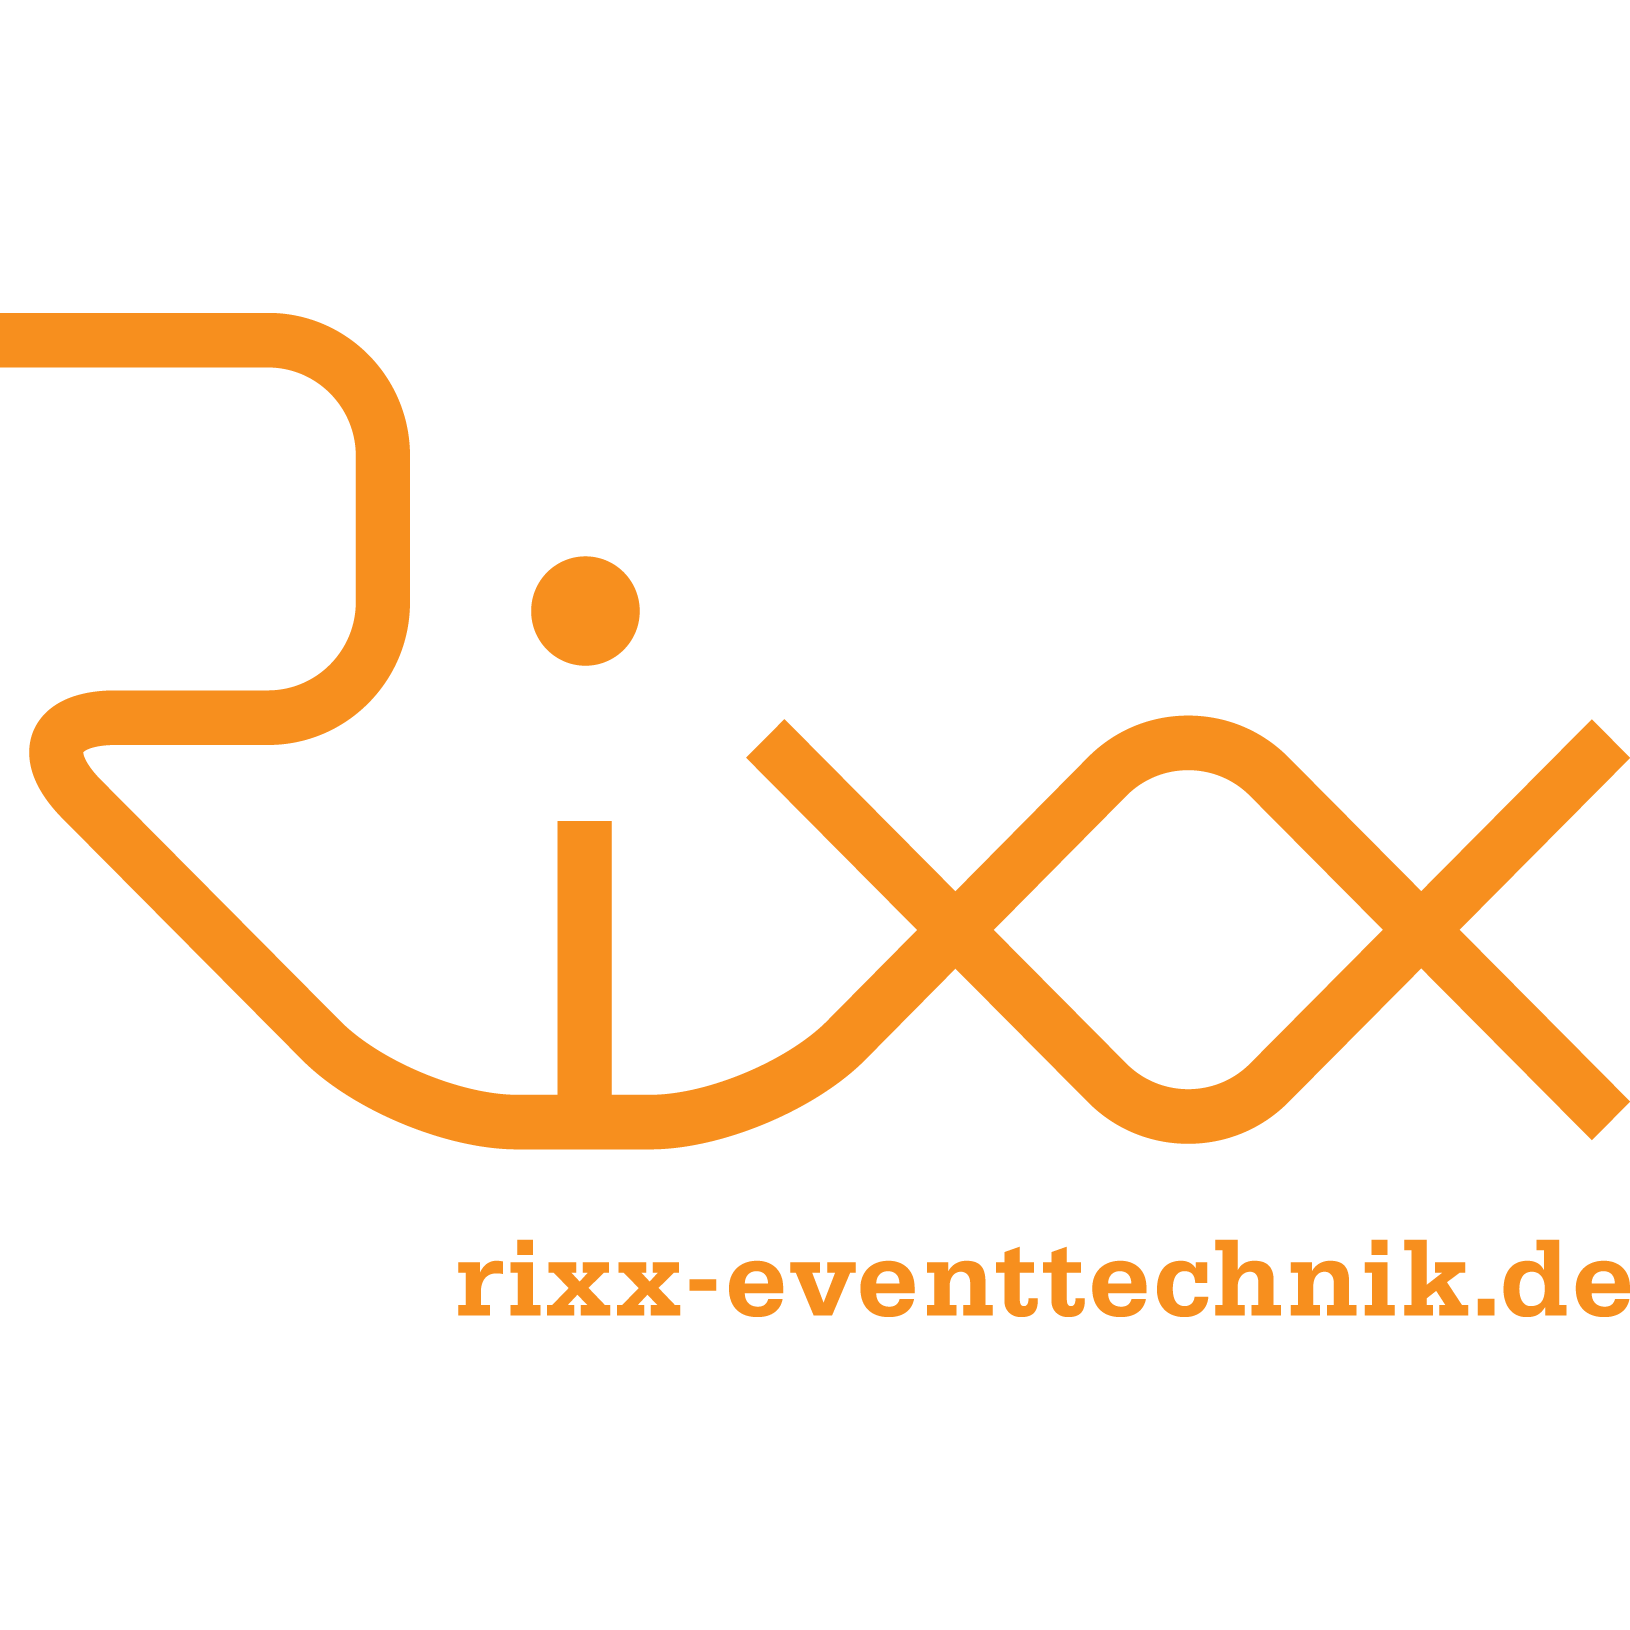 Rixx Eventtechnik GmbH & Co. KG Logo